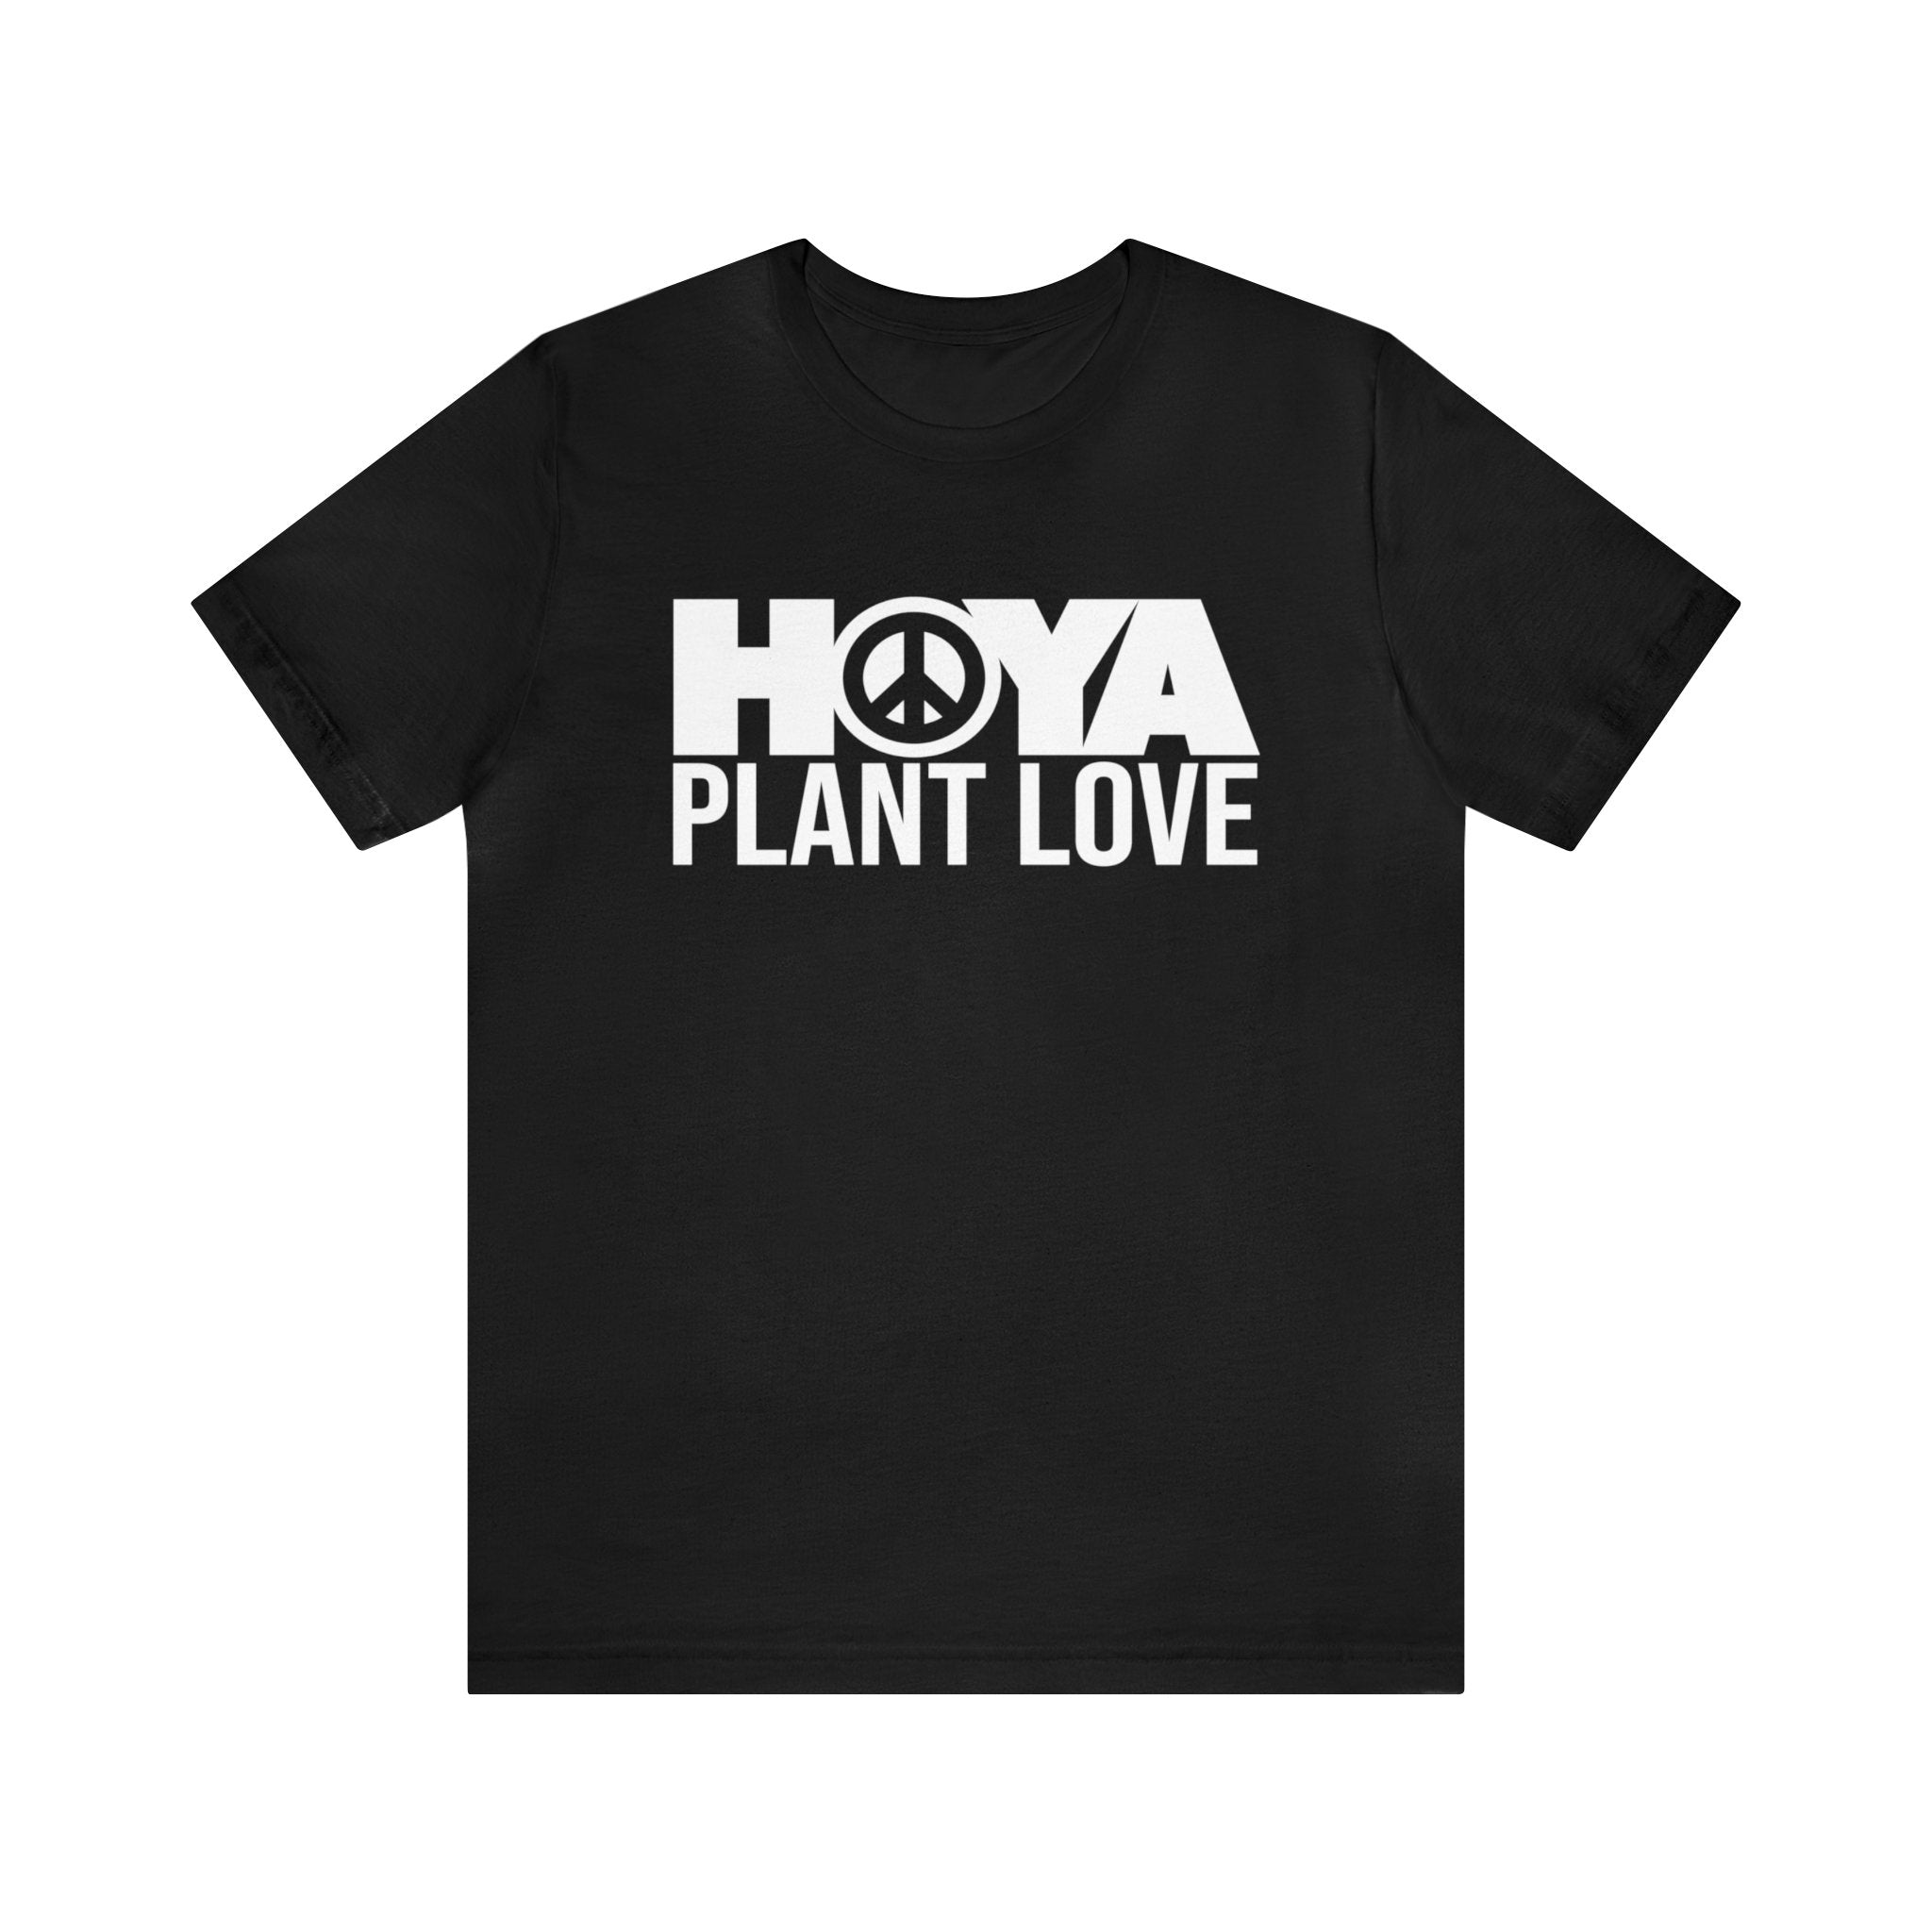 HOYA PLANT LOVE W